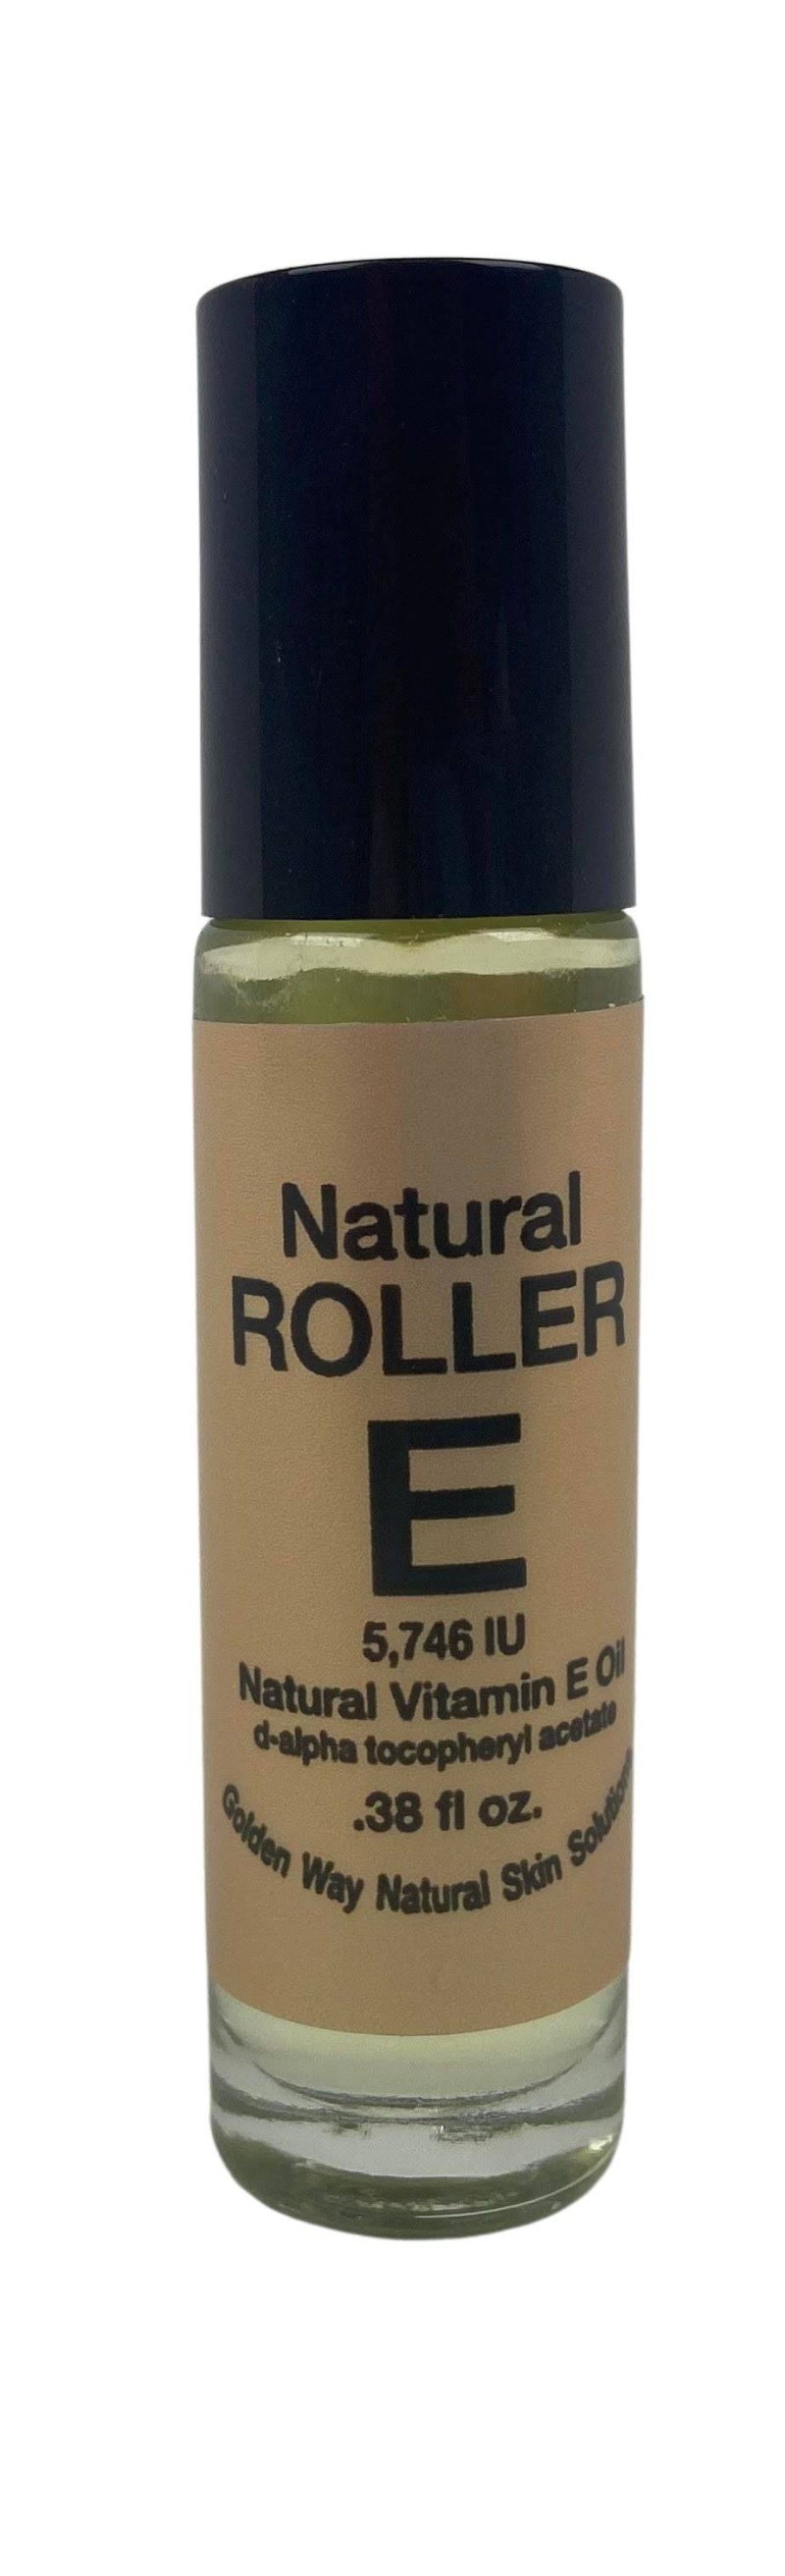 Vitamin E Roller, Natural - .38 Oz